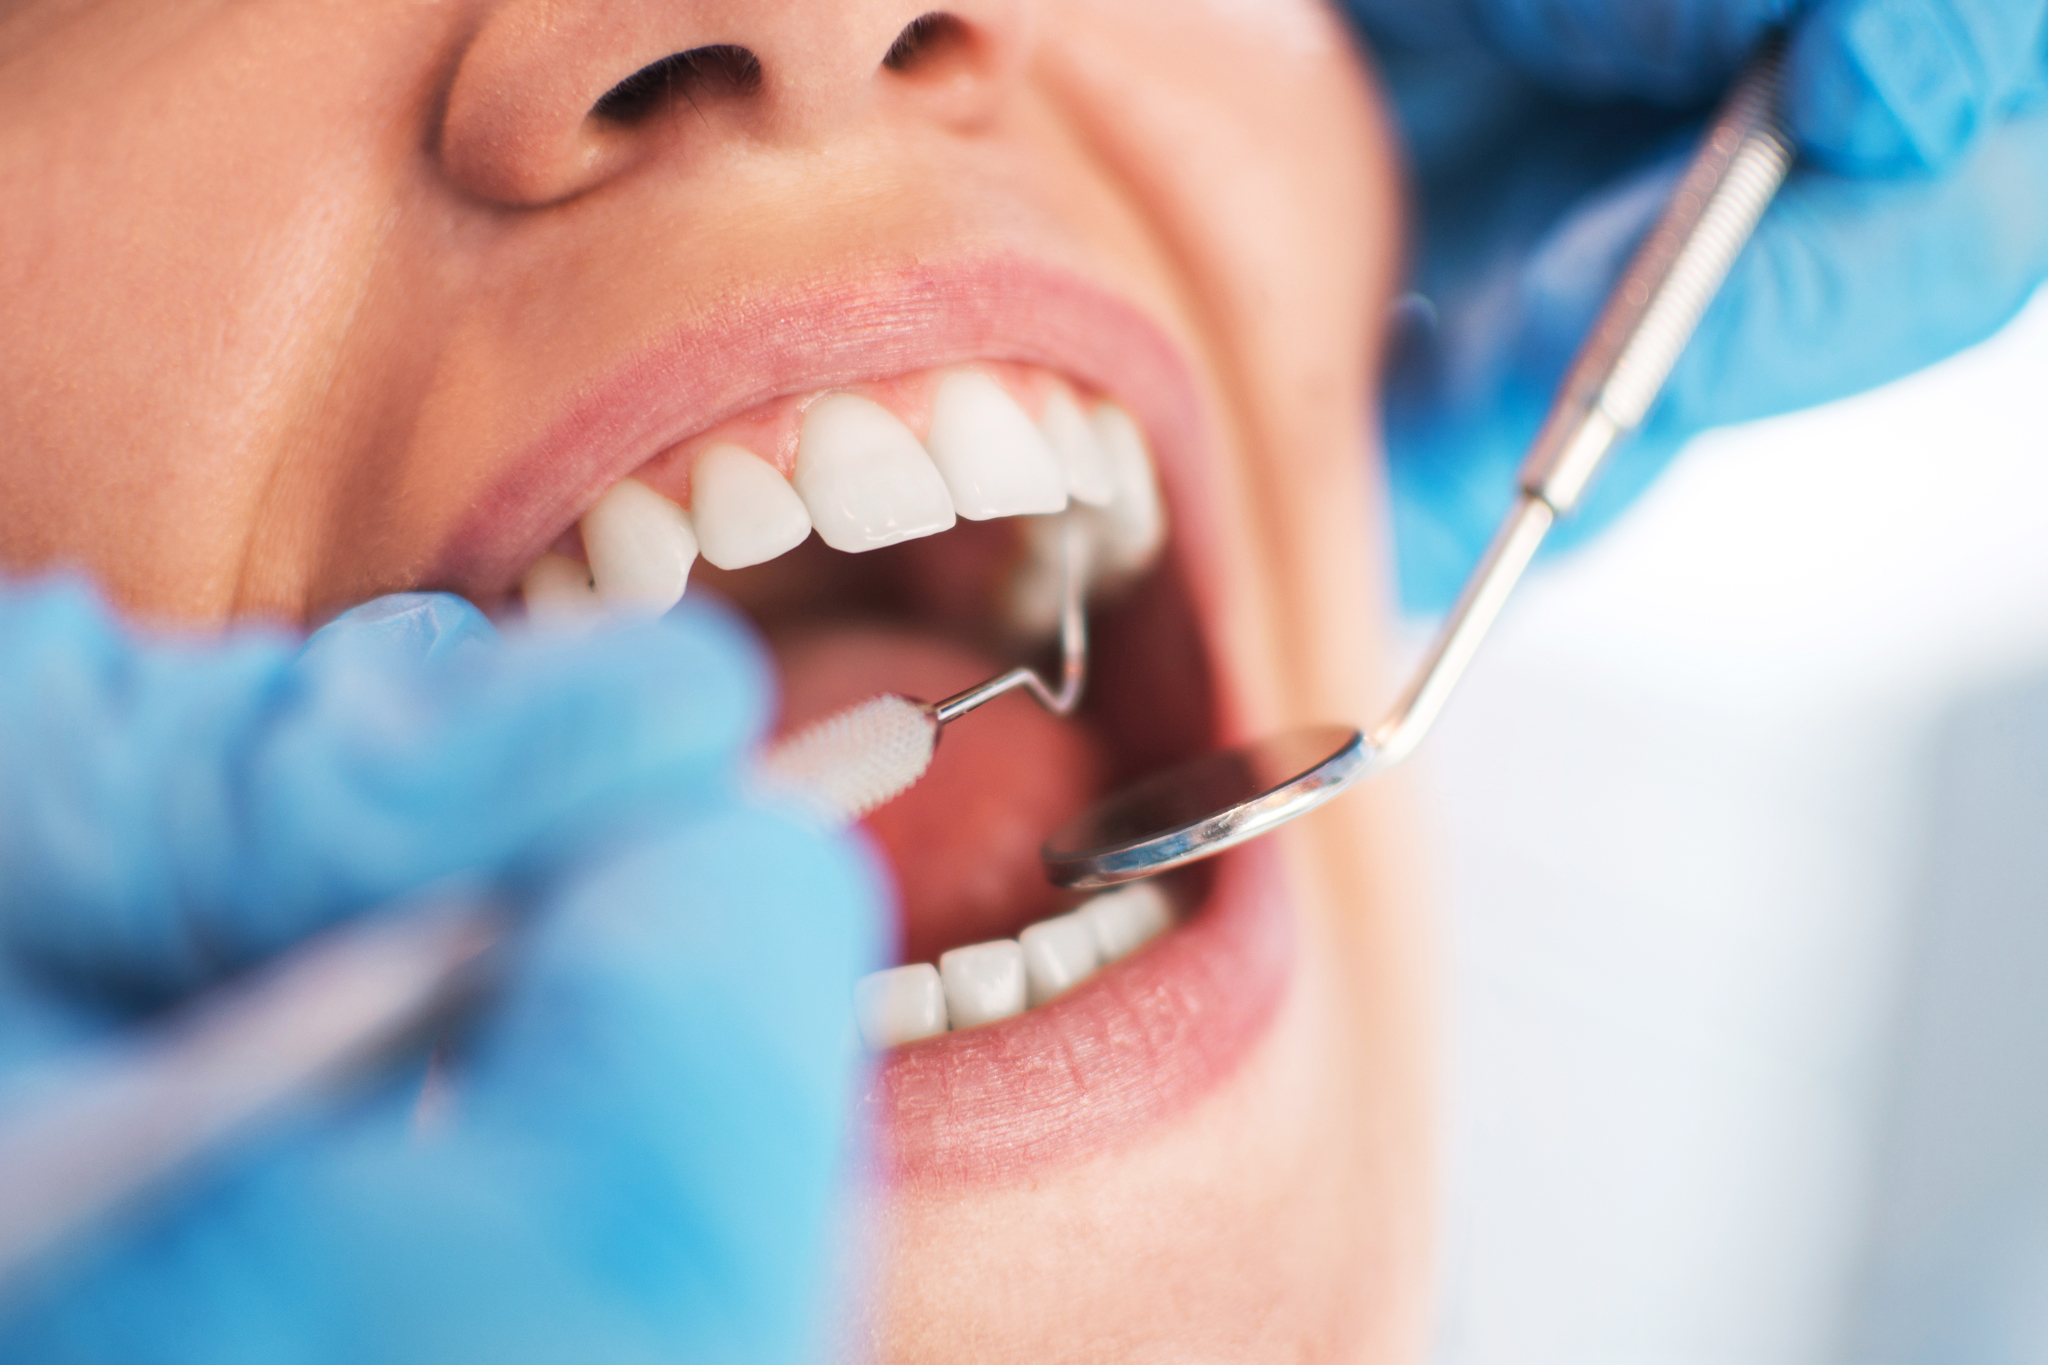 Zahnarztpraxis wassermuehle stuhr pardodontologie